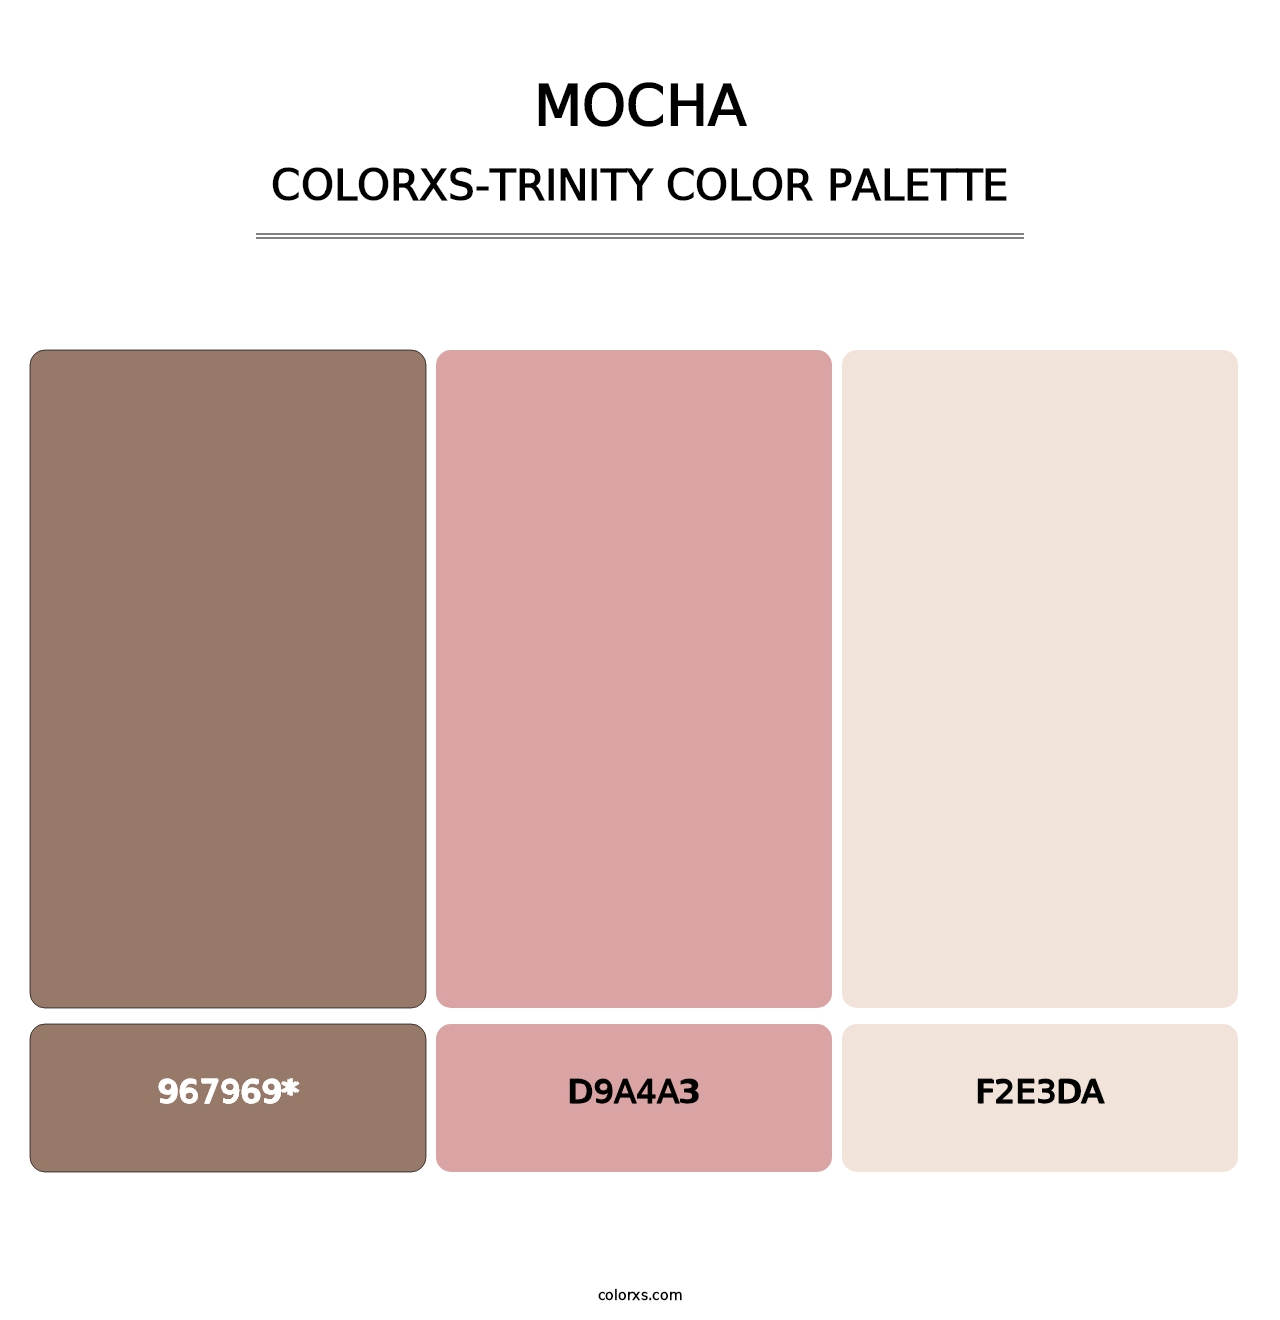 Mocha - Colorxs Trinity Palette